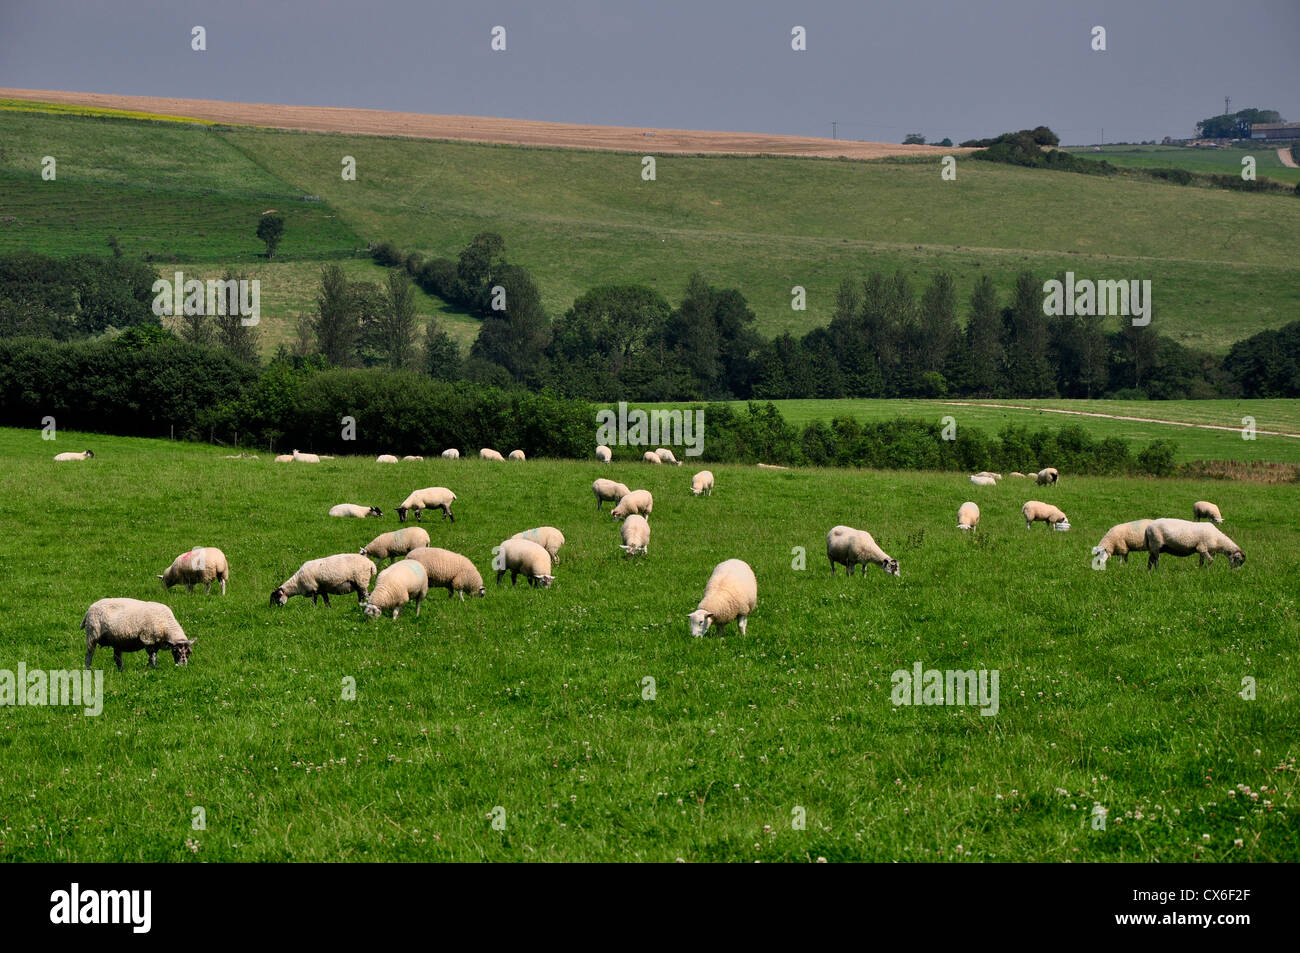 A field full of sheep on a Dorset hillside UK Stock Photo